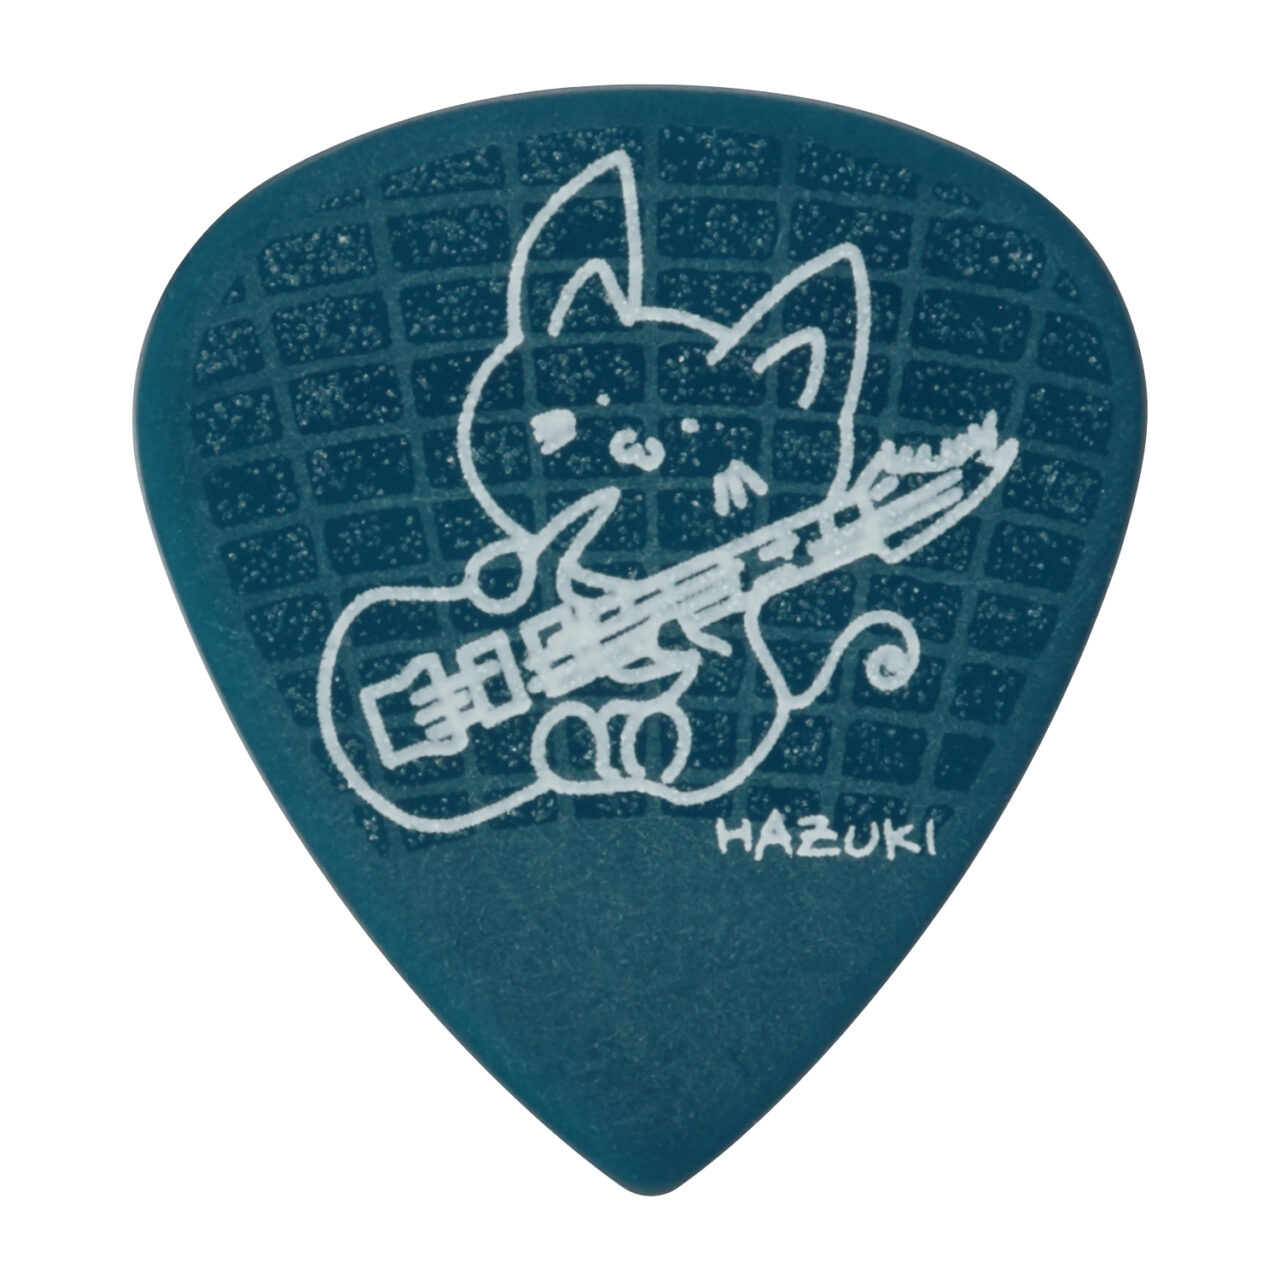 IBANEZ HAZUKI Signature Pick ギターピック 